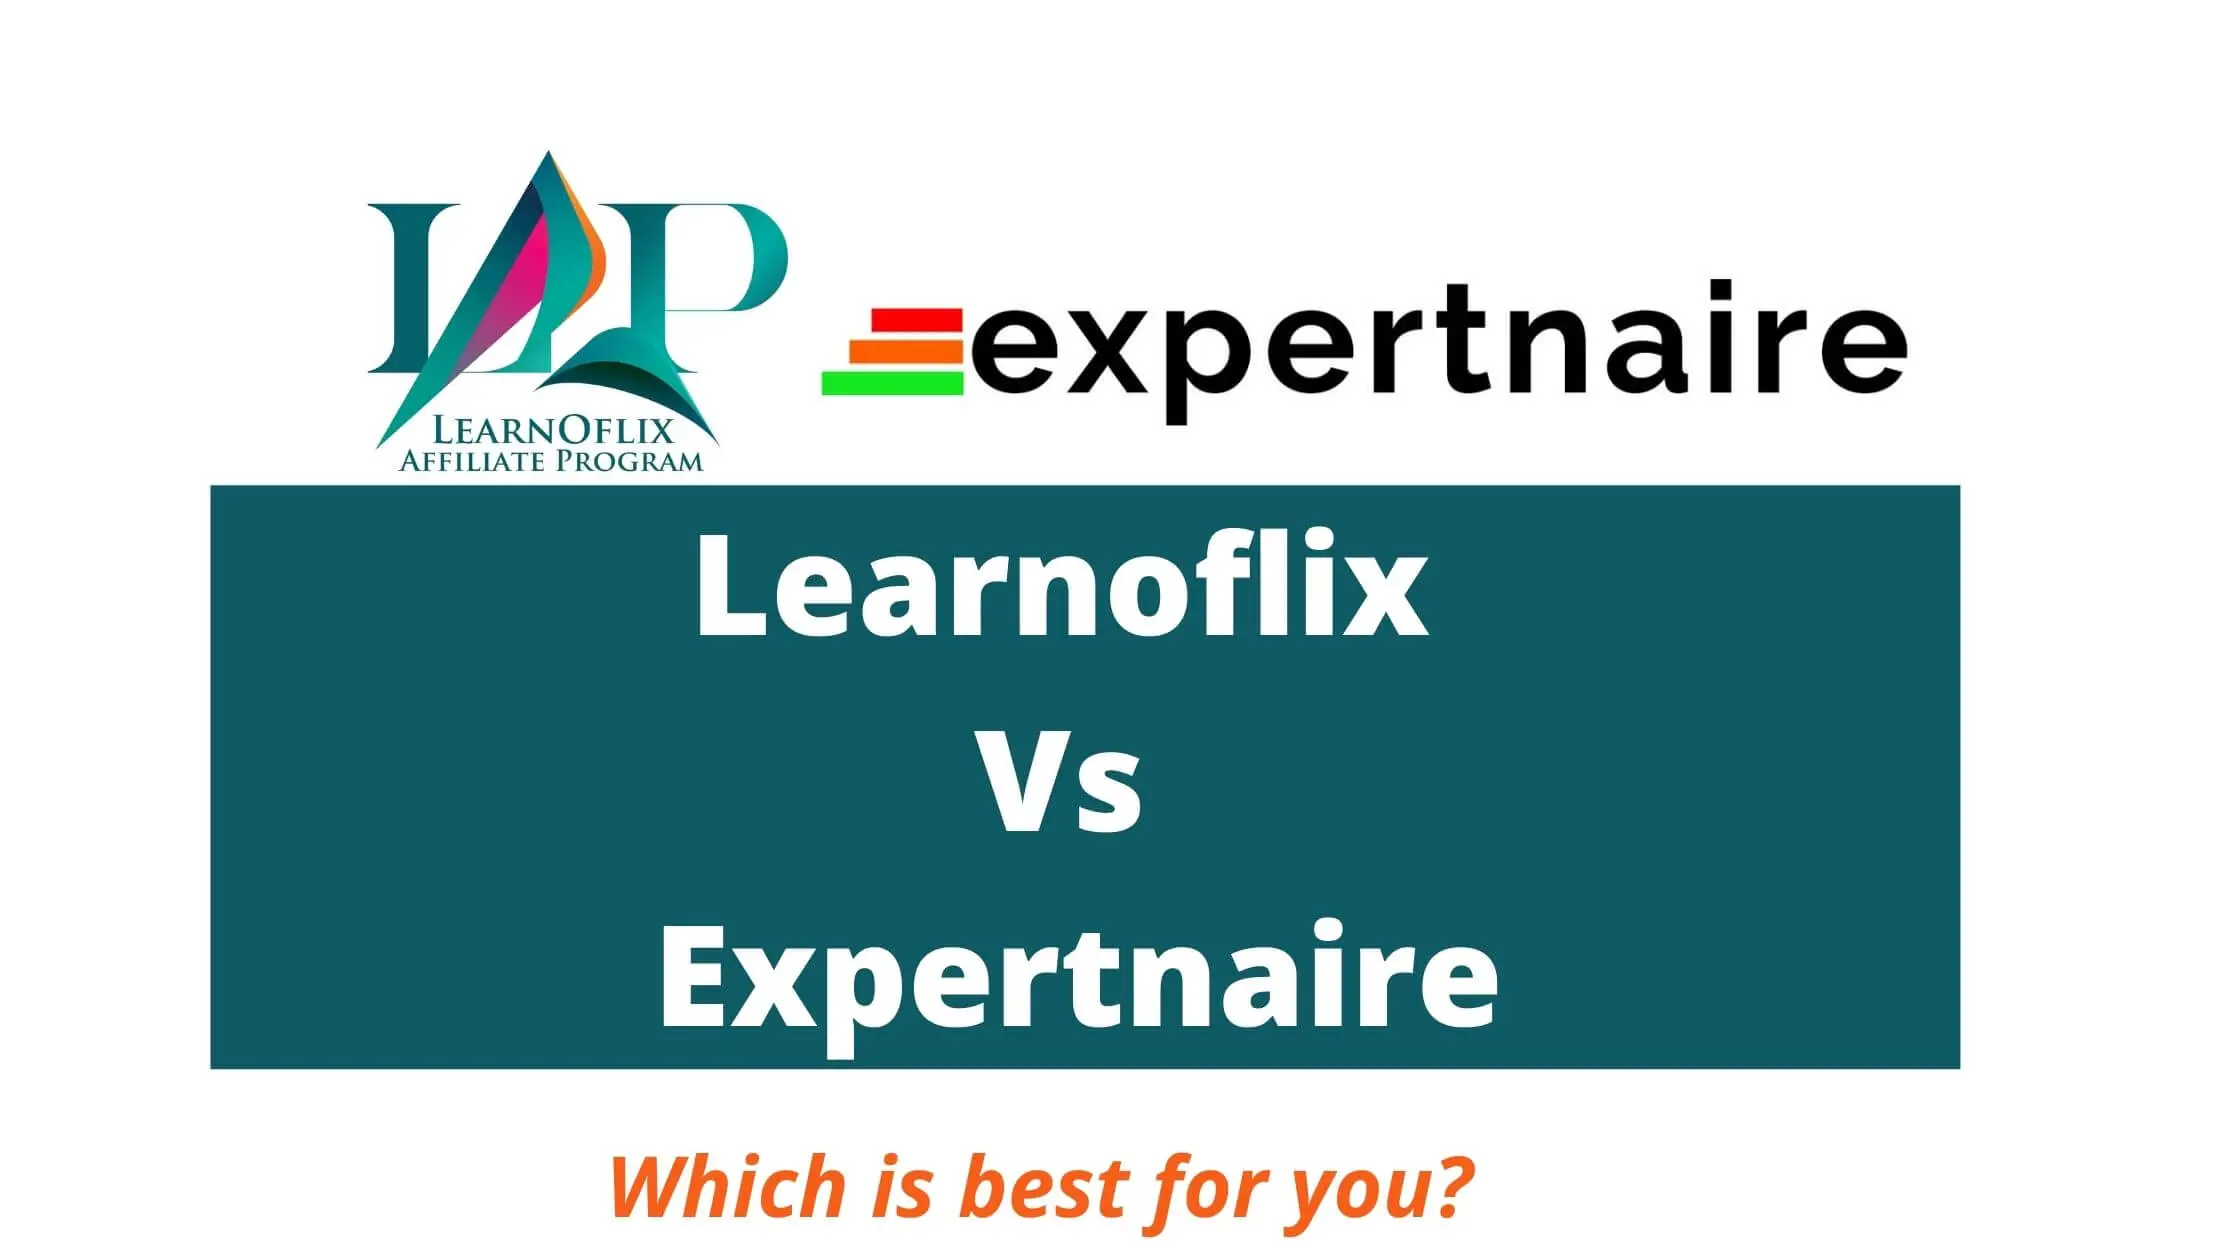 Learnoflix vs Expertnaire